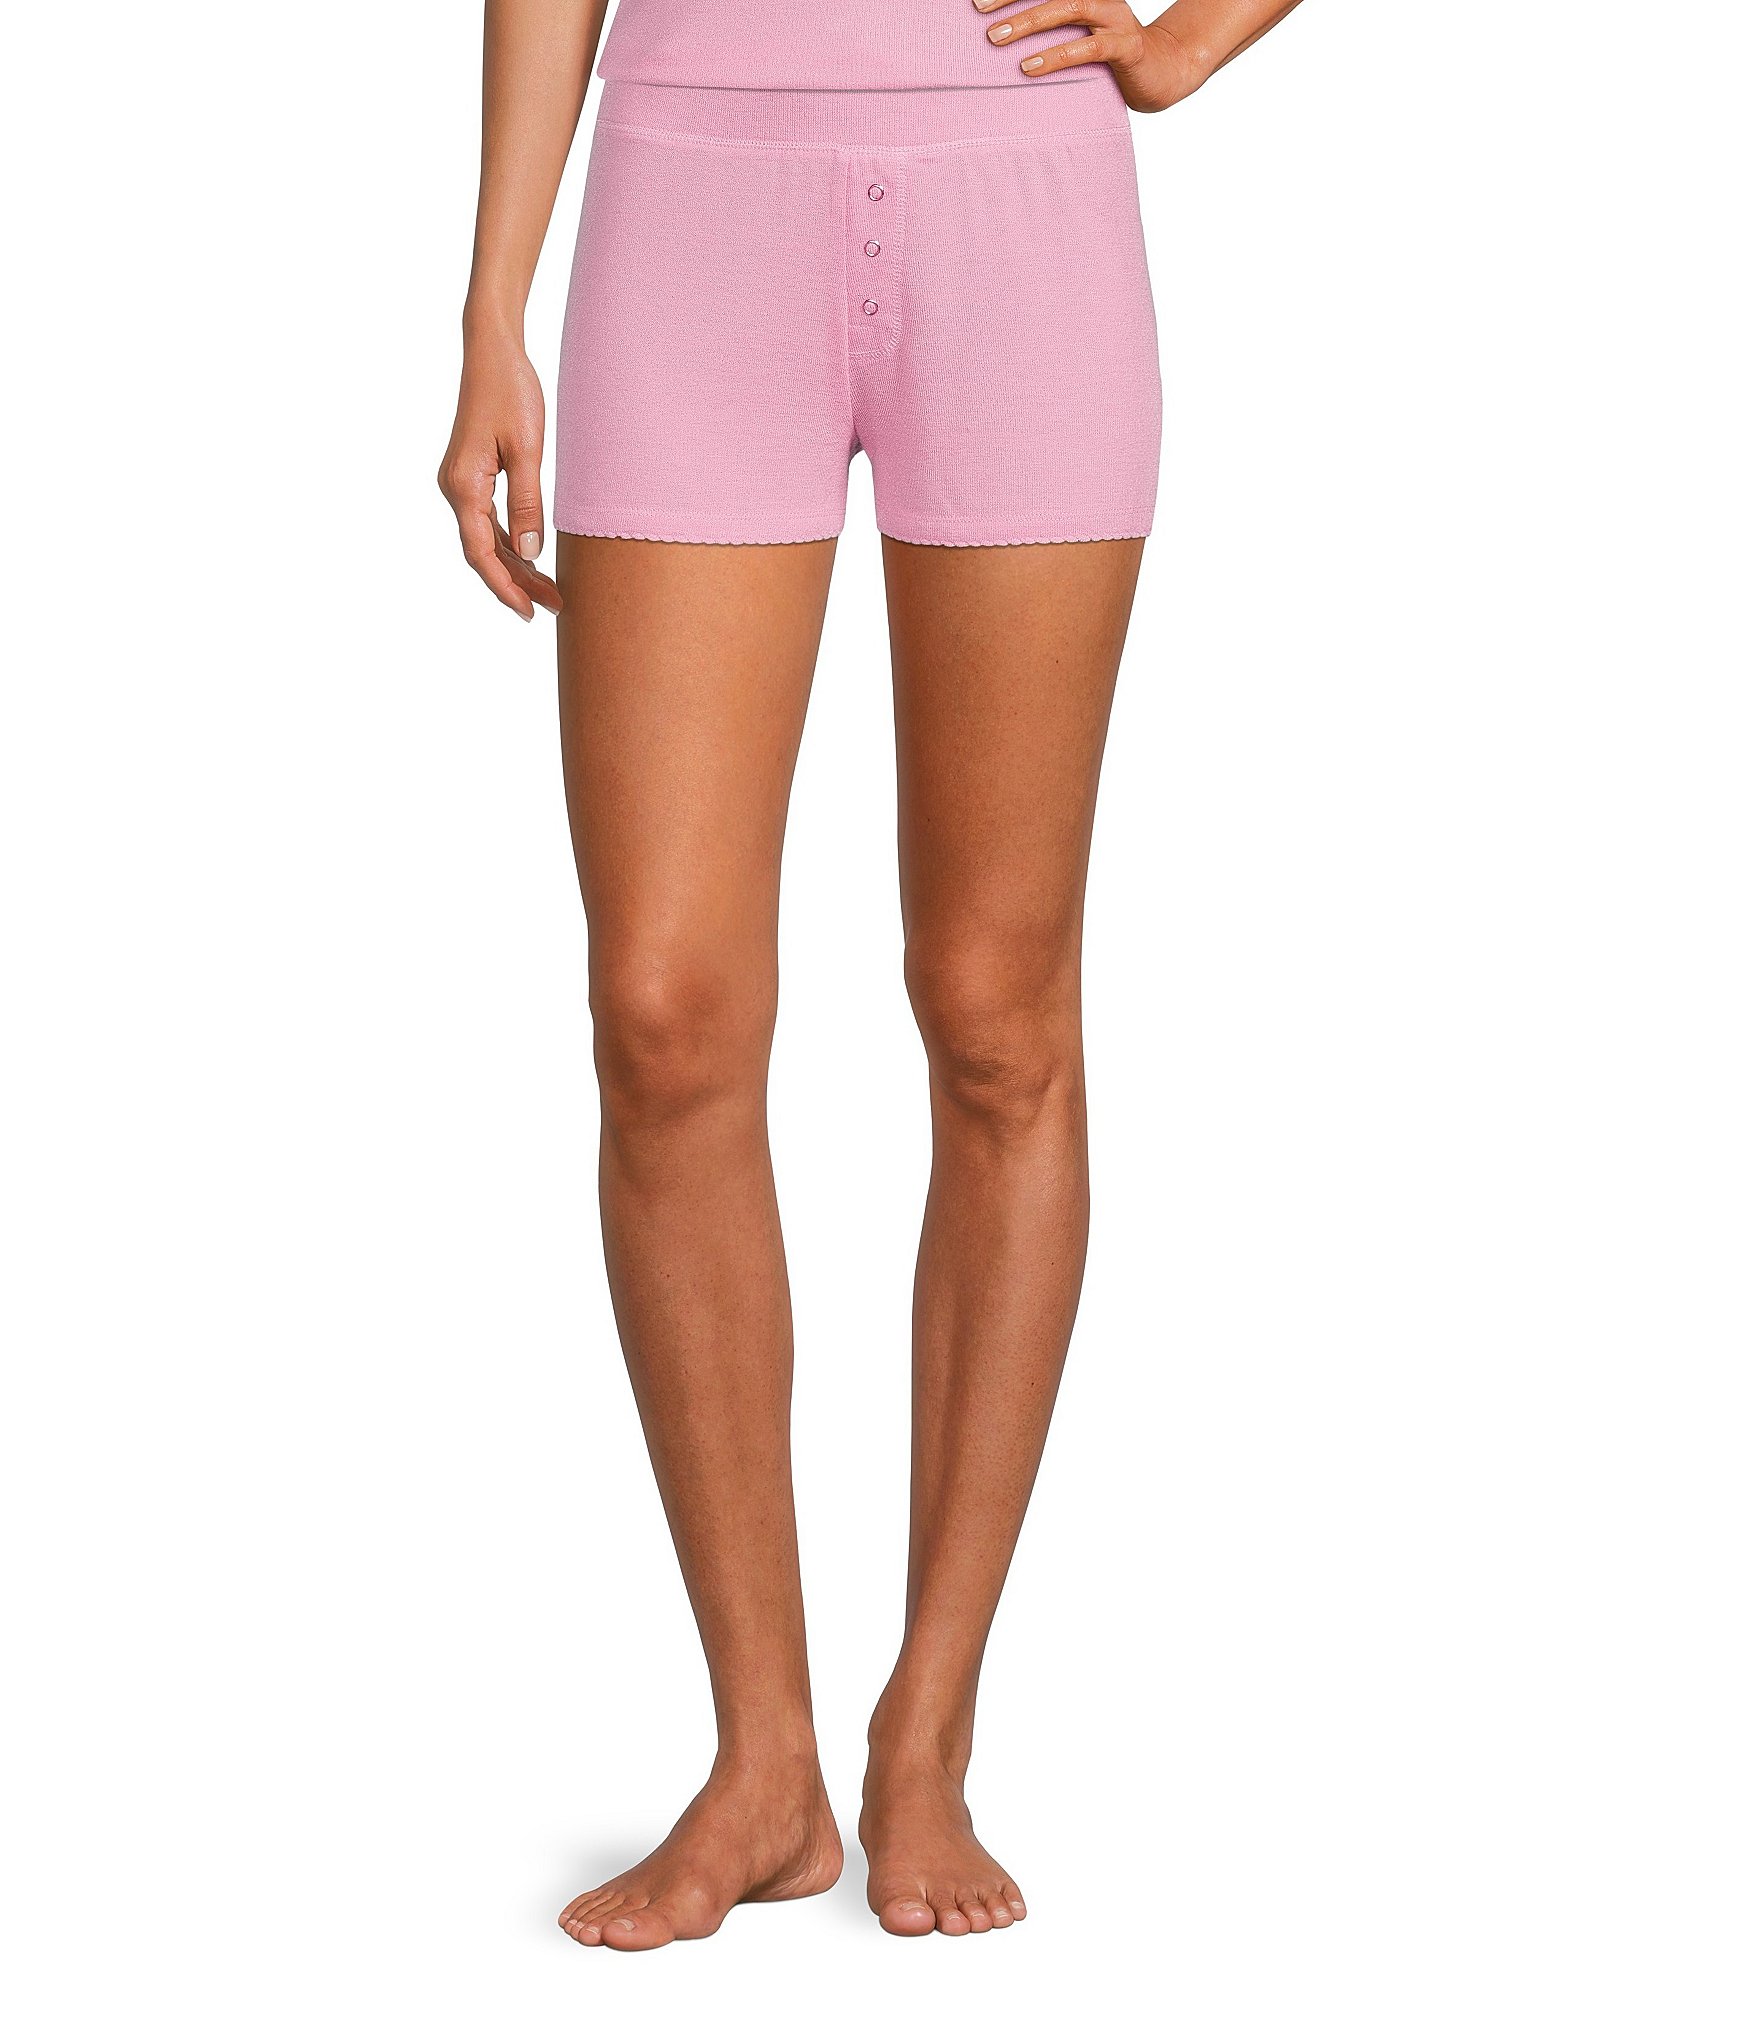 PJ Salvage x Barbie Reloved Coordinating Sleep Shorts